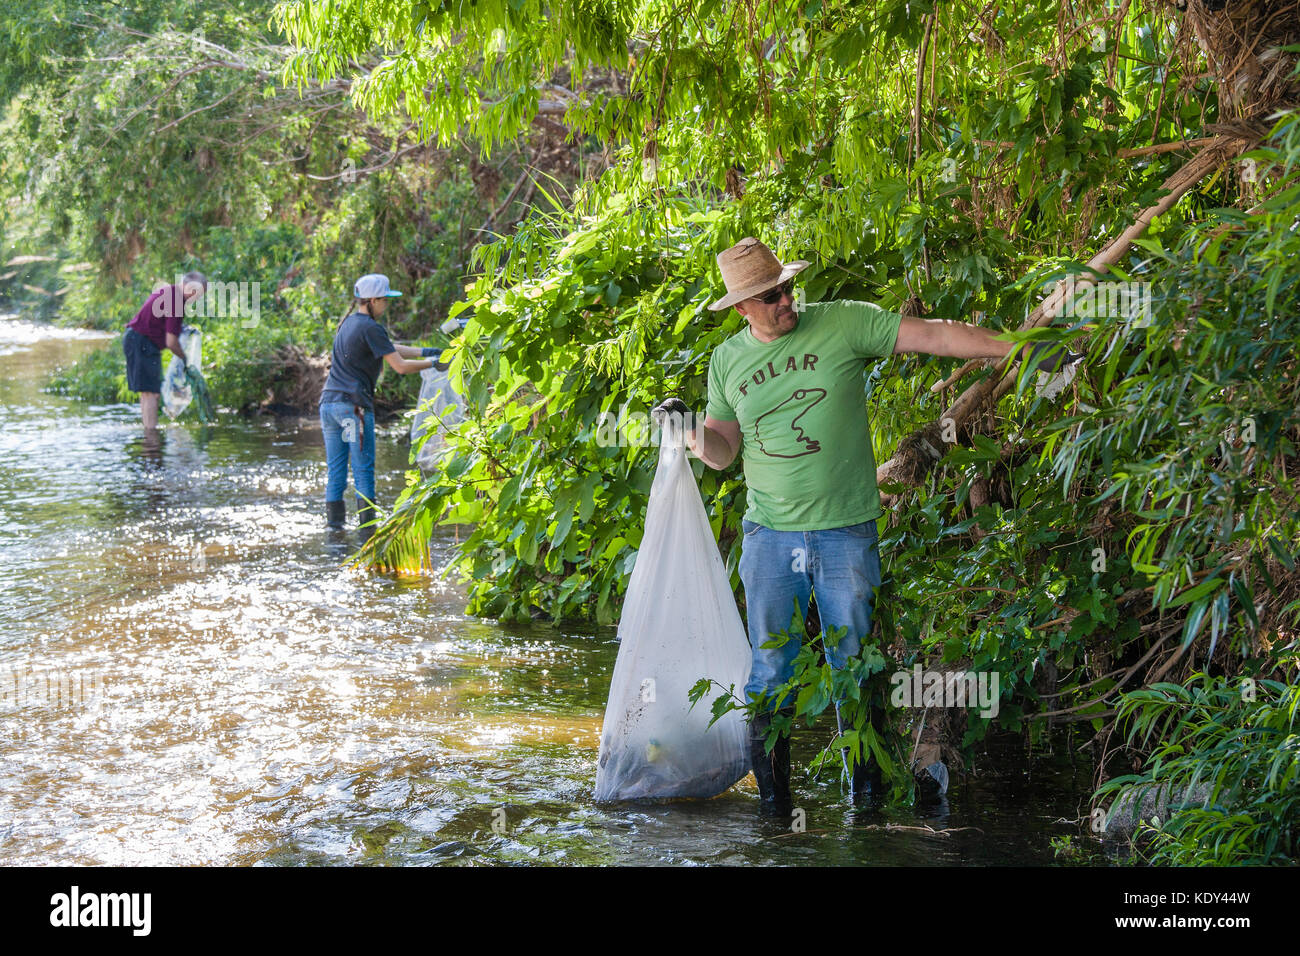 La Gran Limpieza, FoLAR River clean-up April 11, 2015, Los Angeles River, Glendale Narrows, Los Angeles, California, USA Stock Photo